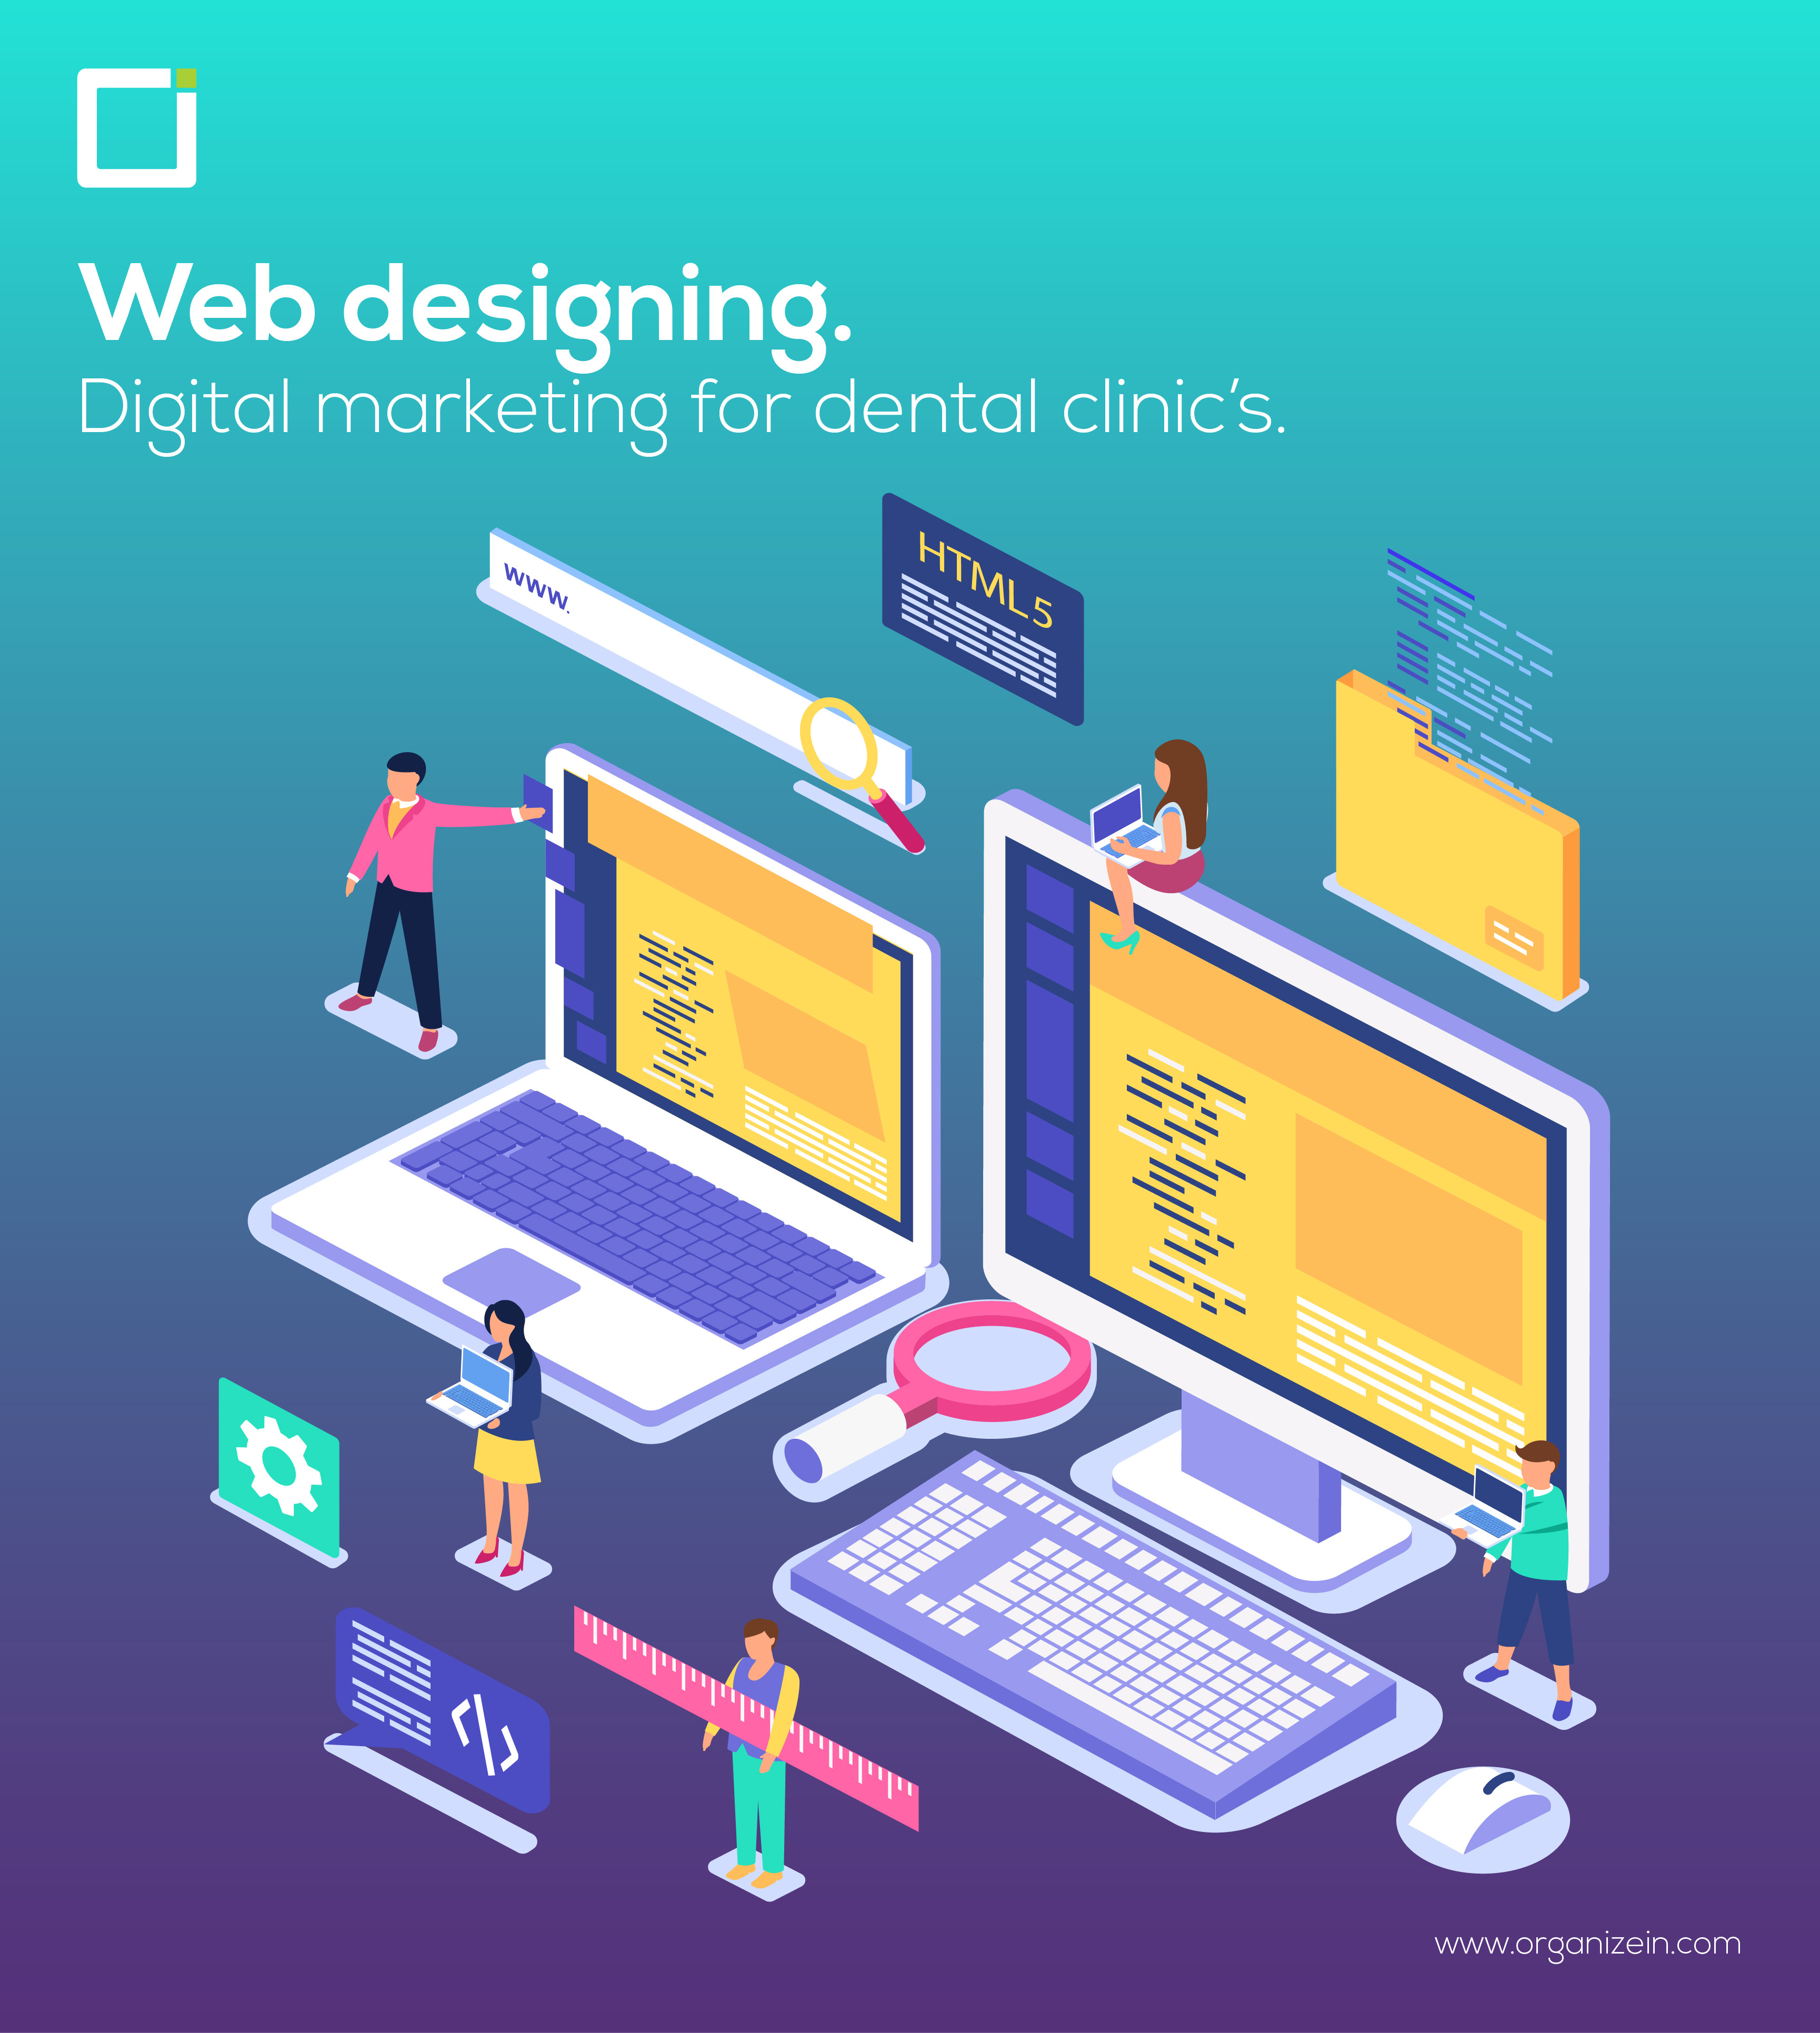 Digital marketing for dental clinics